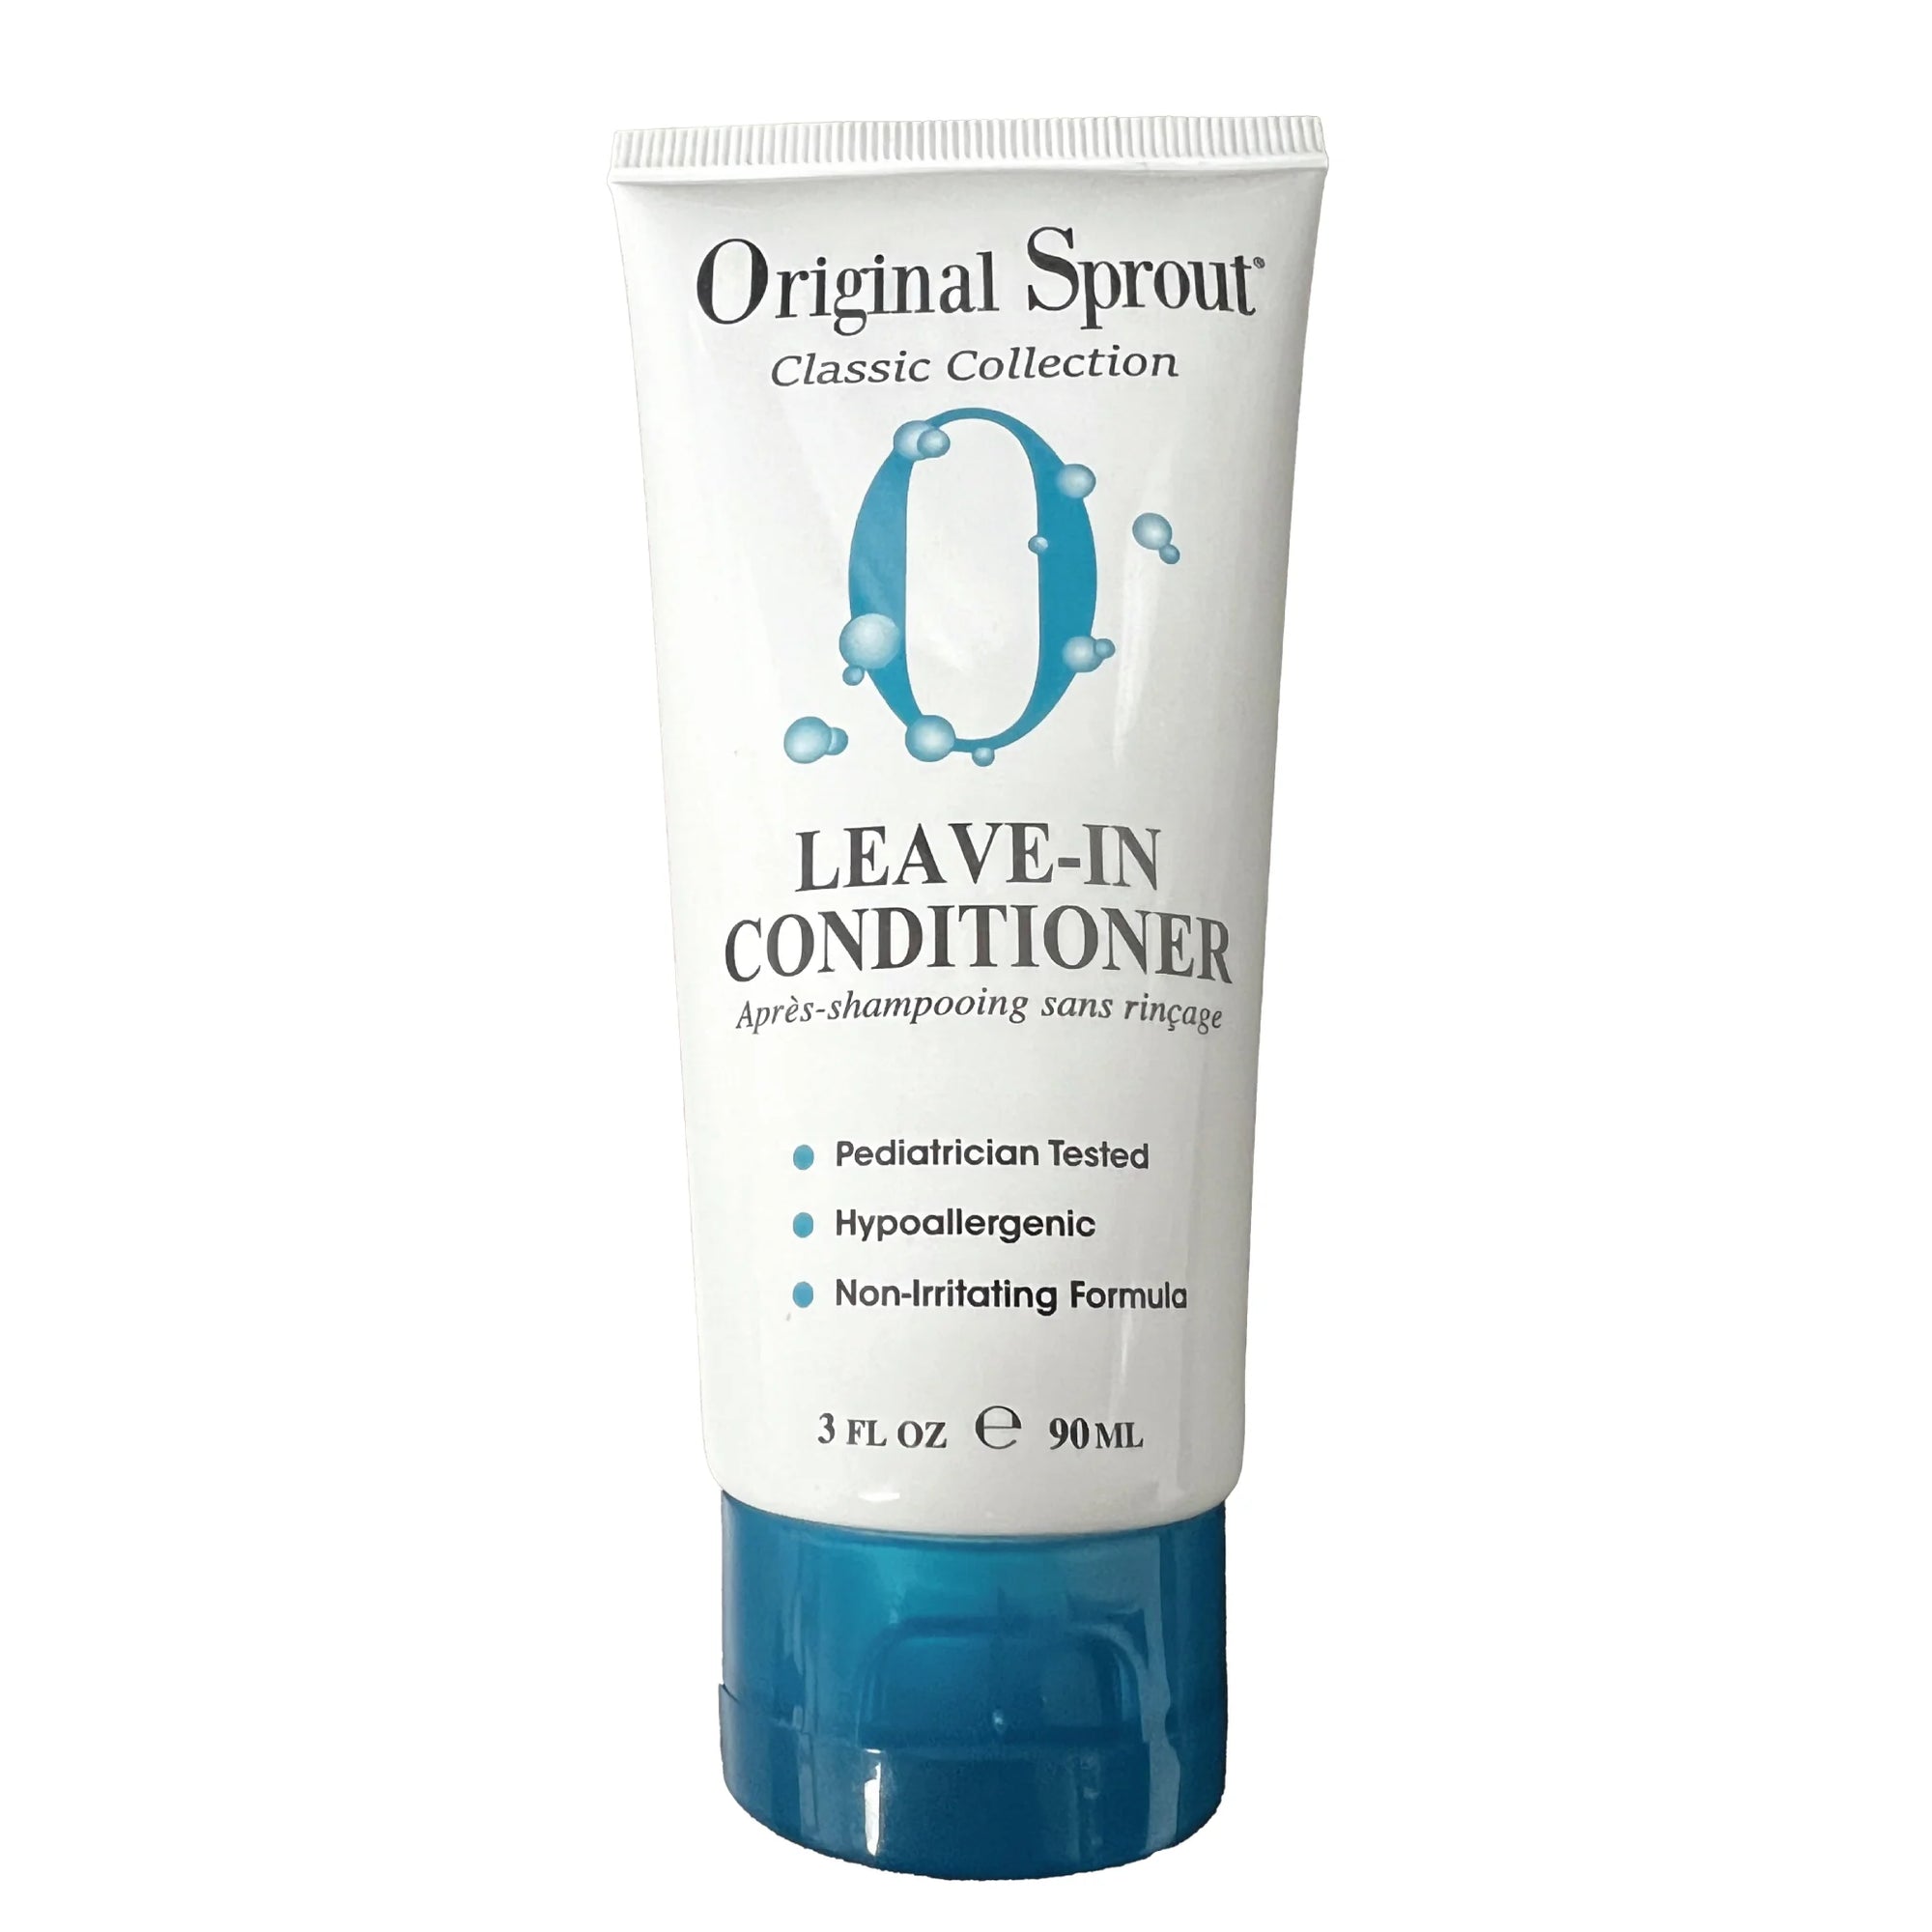 Original Sprout hair care 3 oz/90 ml Original Sprout Leave-In Conditioner